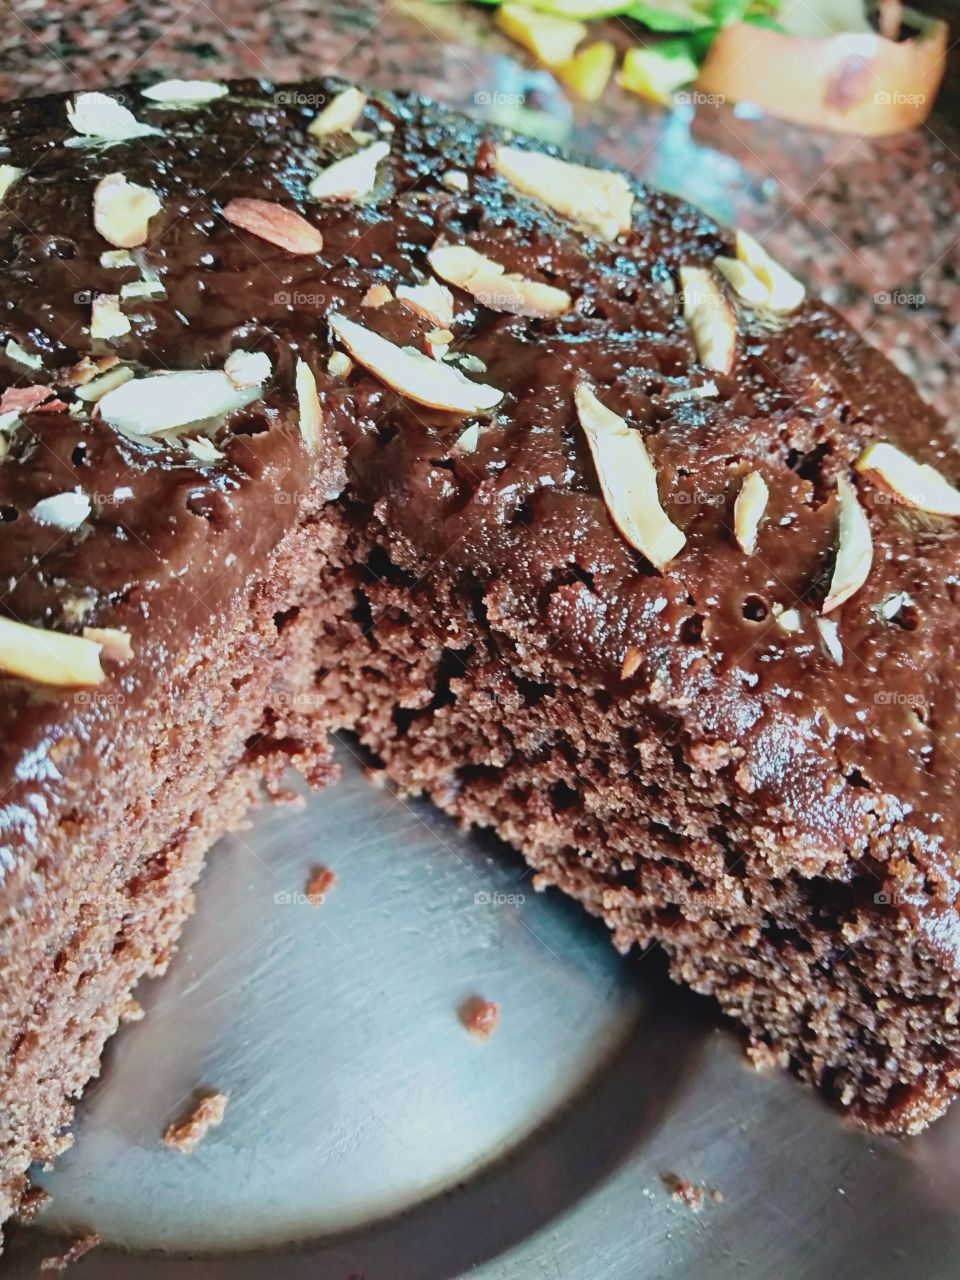 Delicious chocolate cake